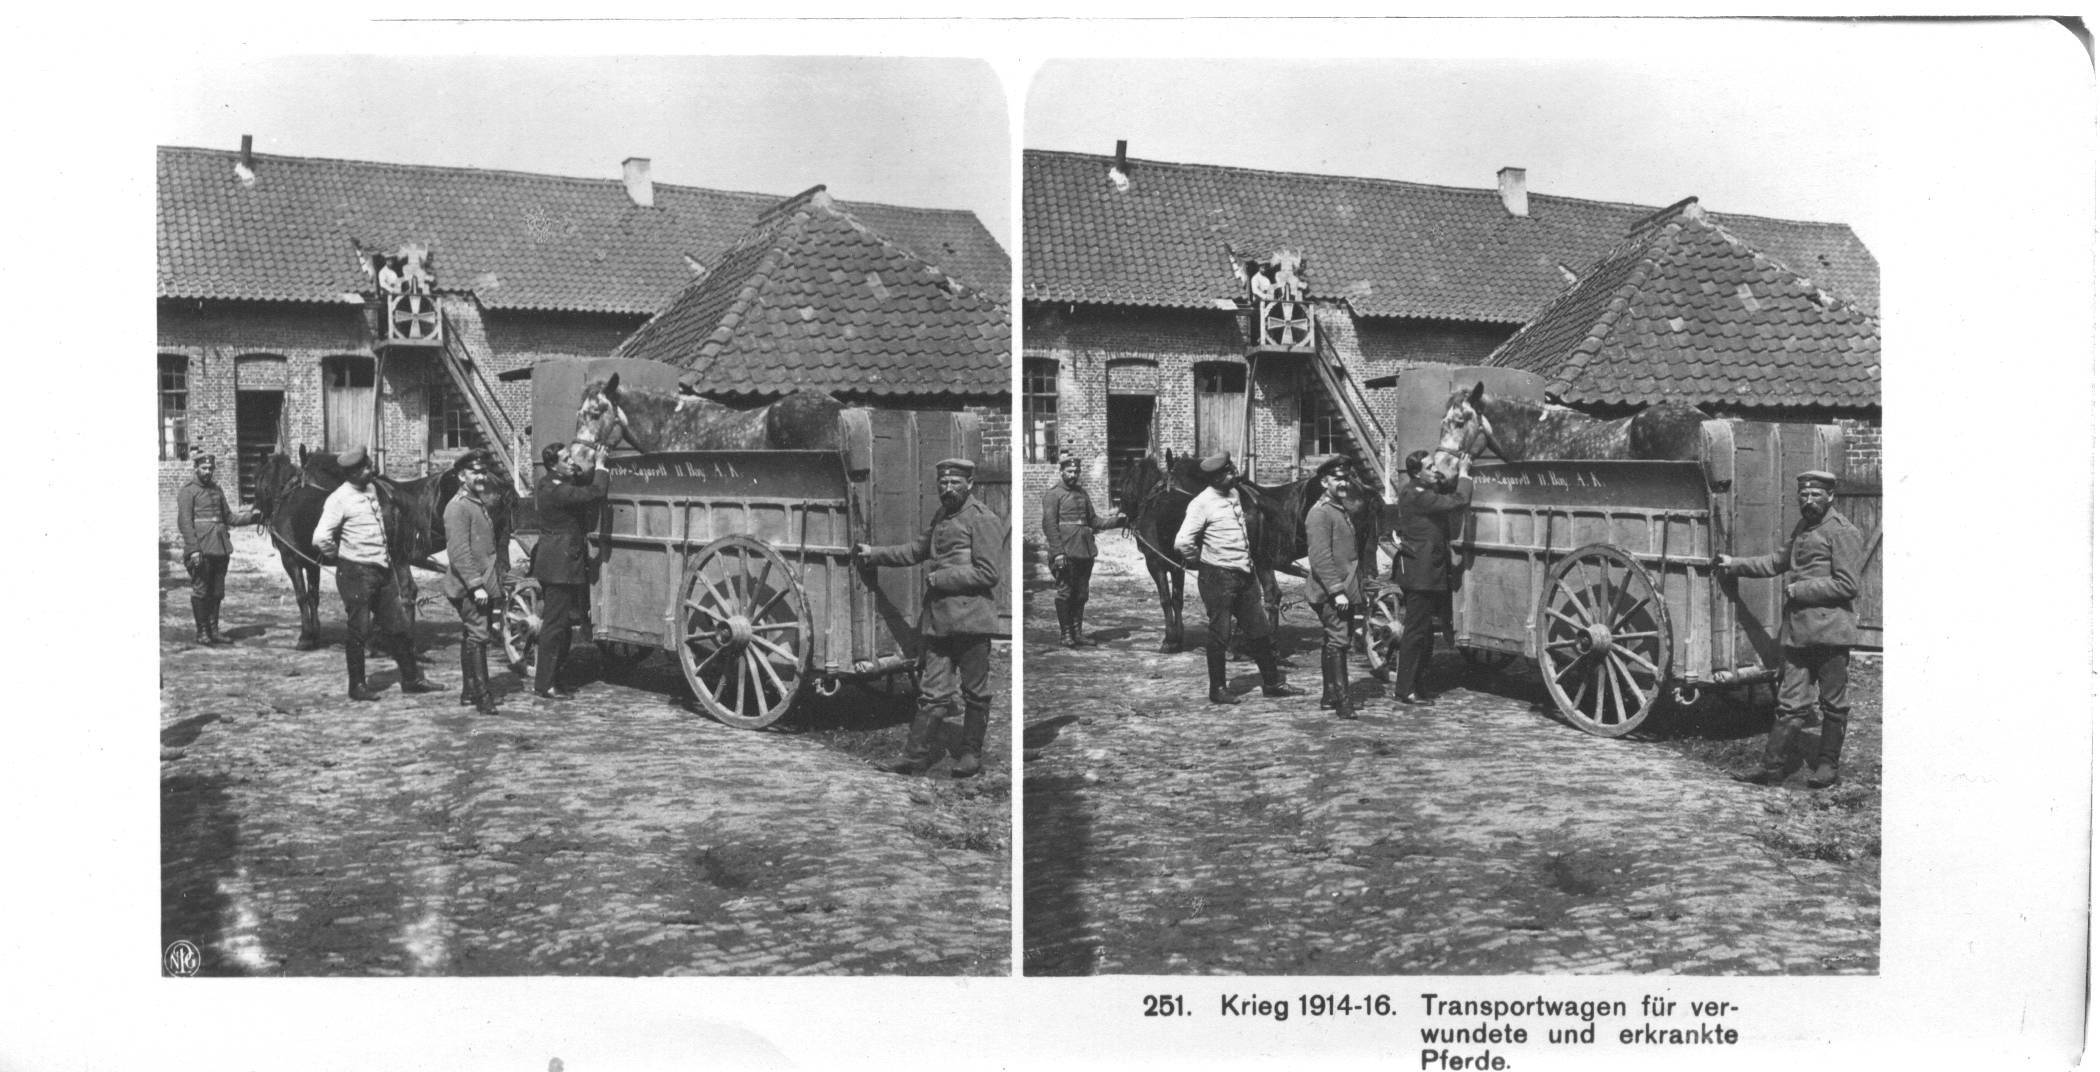 "Transportwagen fuer verwundete und erkrankte Pferde" - Transport wagons for wounded and sick horses